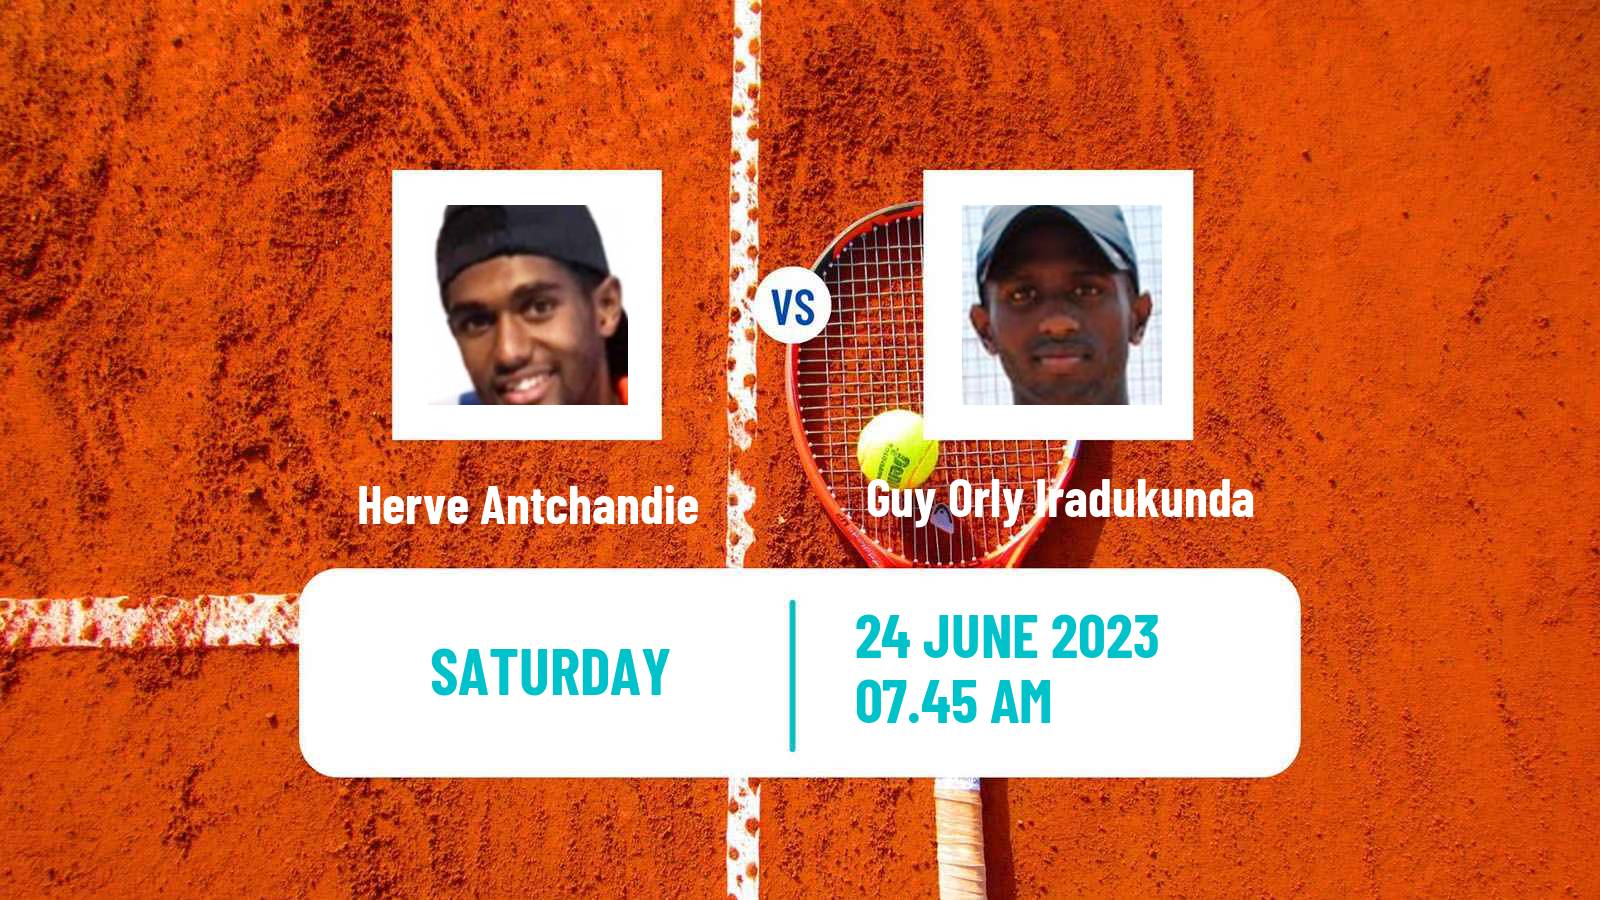 Tennis Davis Cup Group V Herve Antchandie - Guy Orly Iradukunda